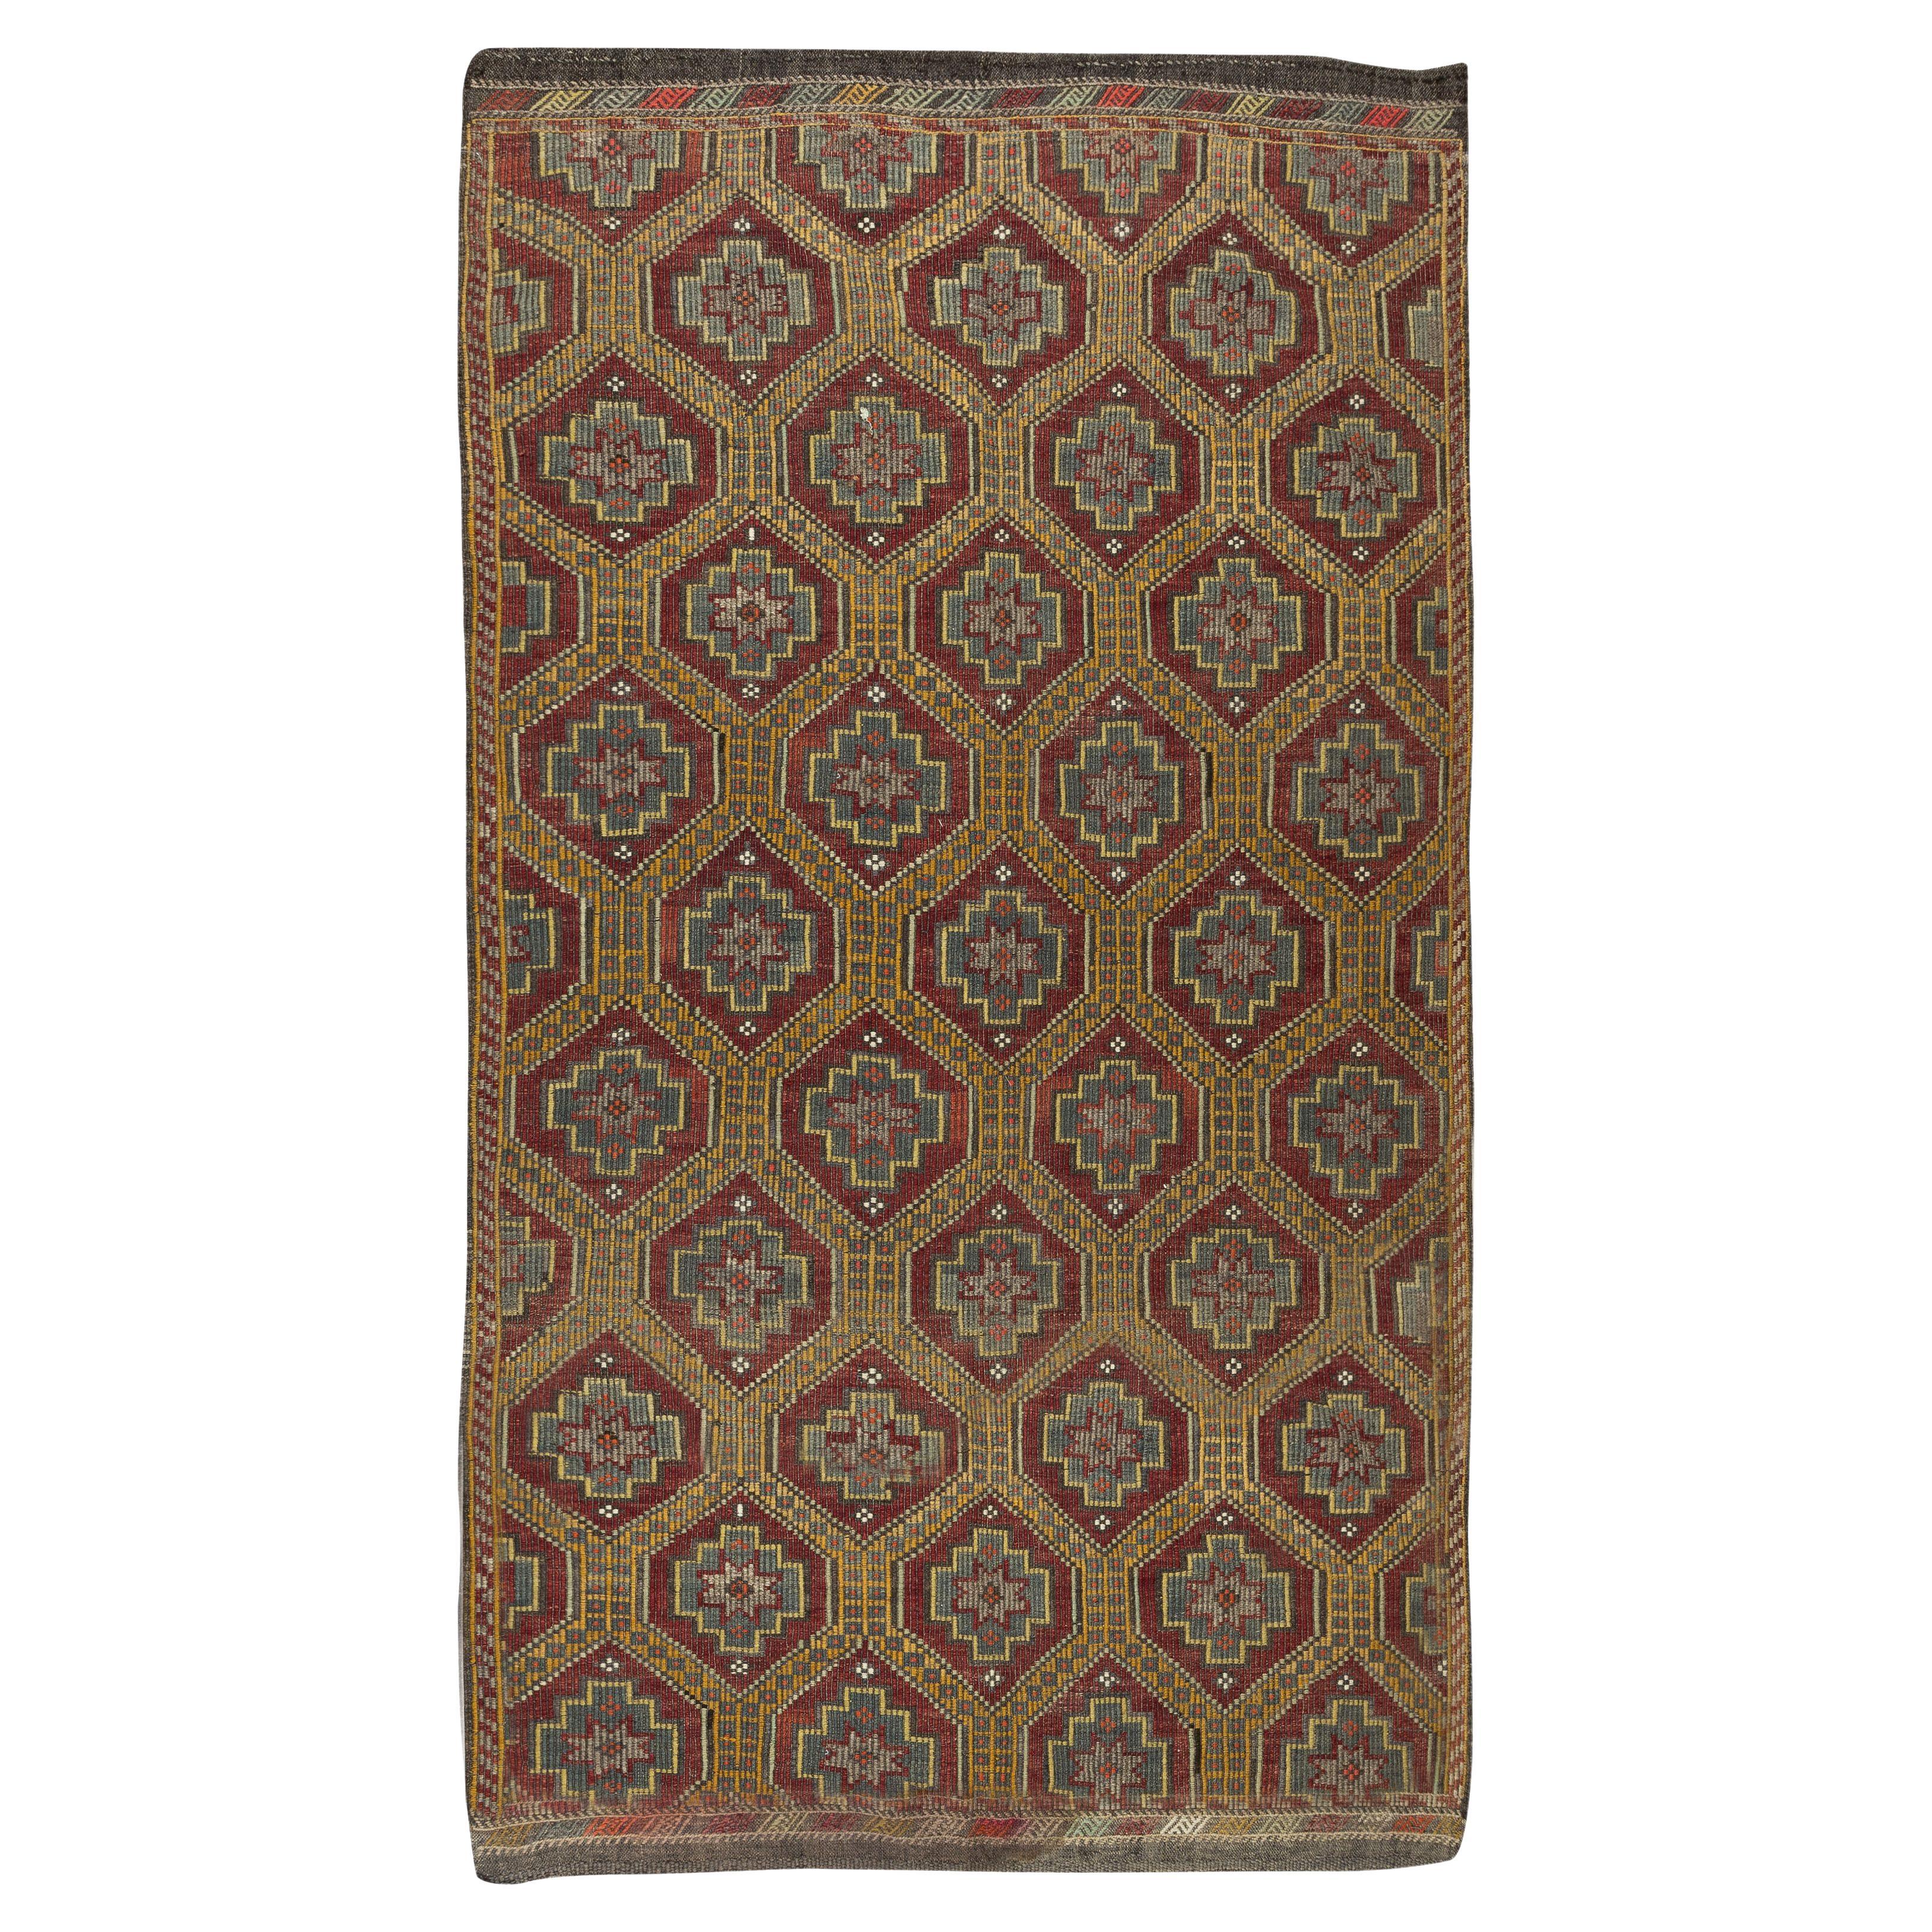 Vintage Turkish Jijim Kilim, Floral Pattern Hand-Woven Rug, 100% Wool